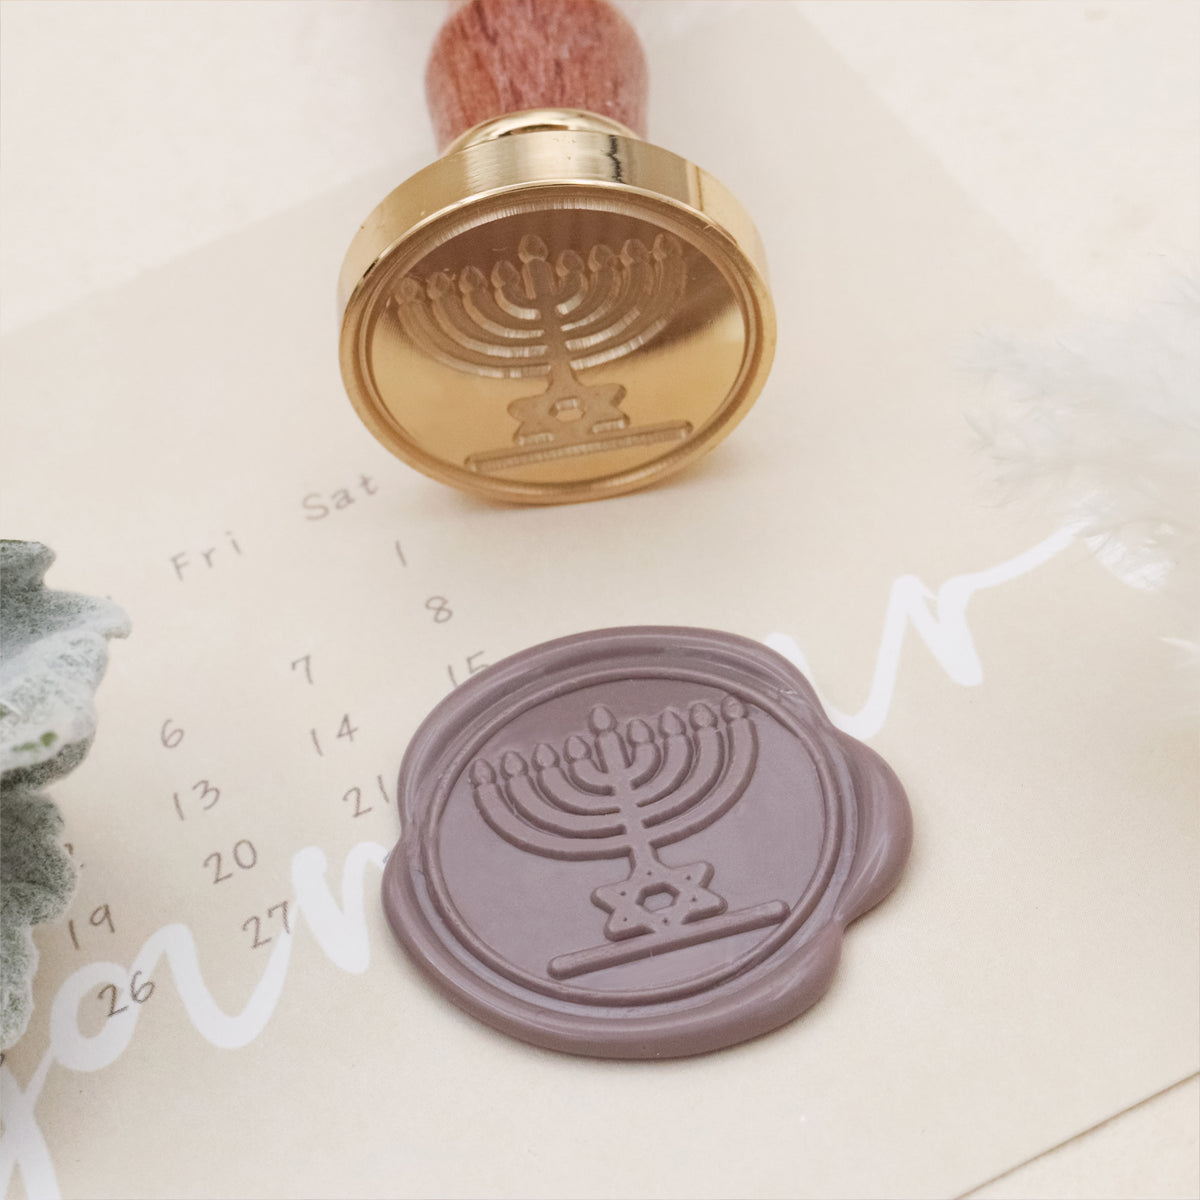 Stamprints Jewish Culture Wax Seal Stamp 1